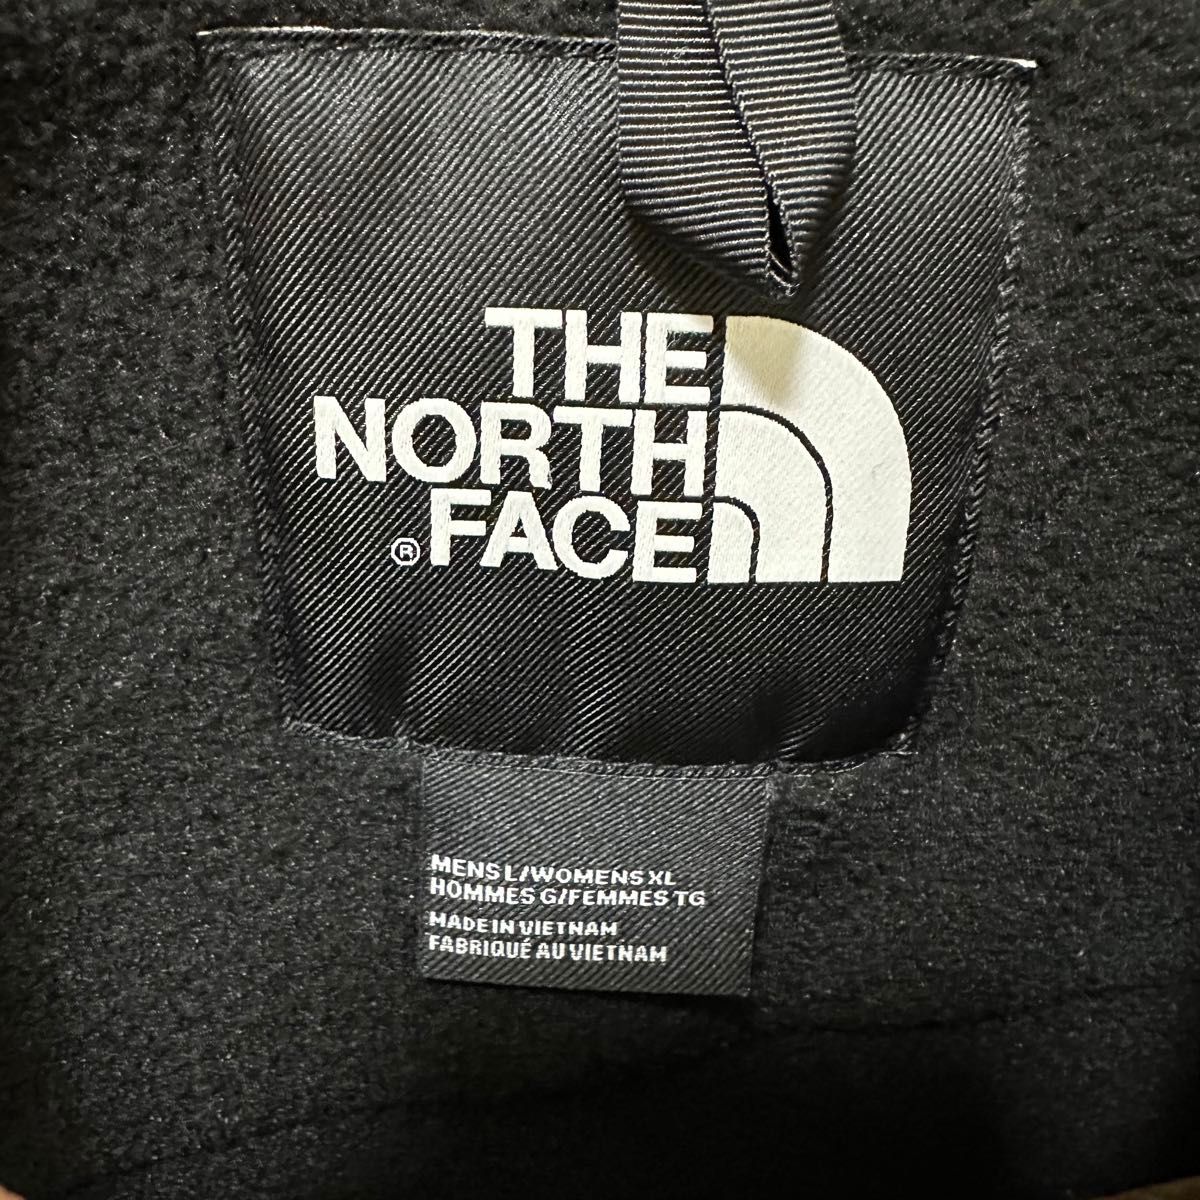 The North face 7 summit Denali Jacket ノースフェイス デナリ ジャケット サミット Lサイズ